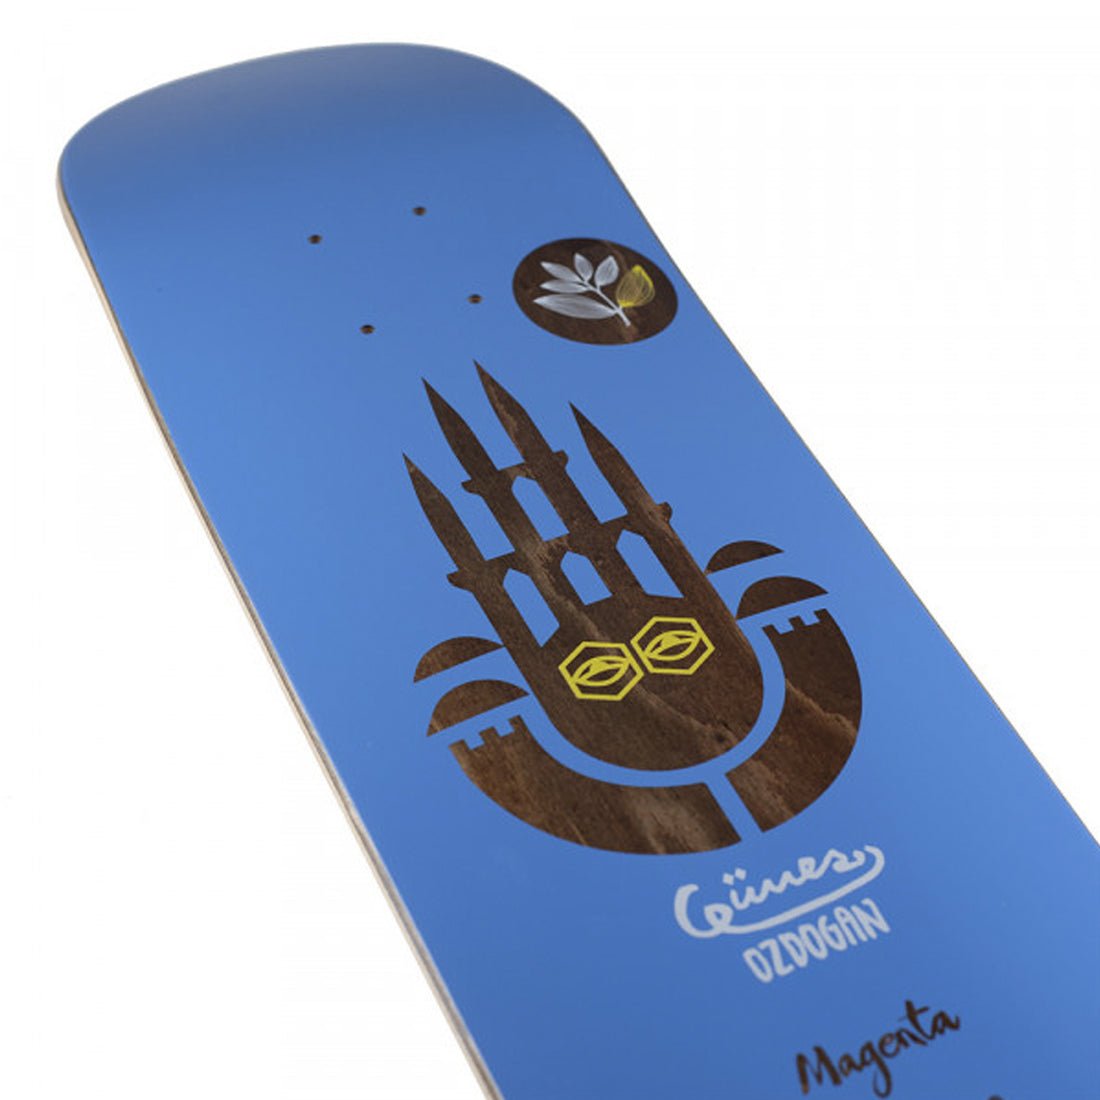 Magenta Ozdogan Swedstanbul 8.0" Skateboard Deck